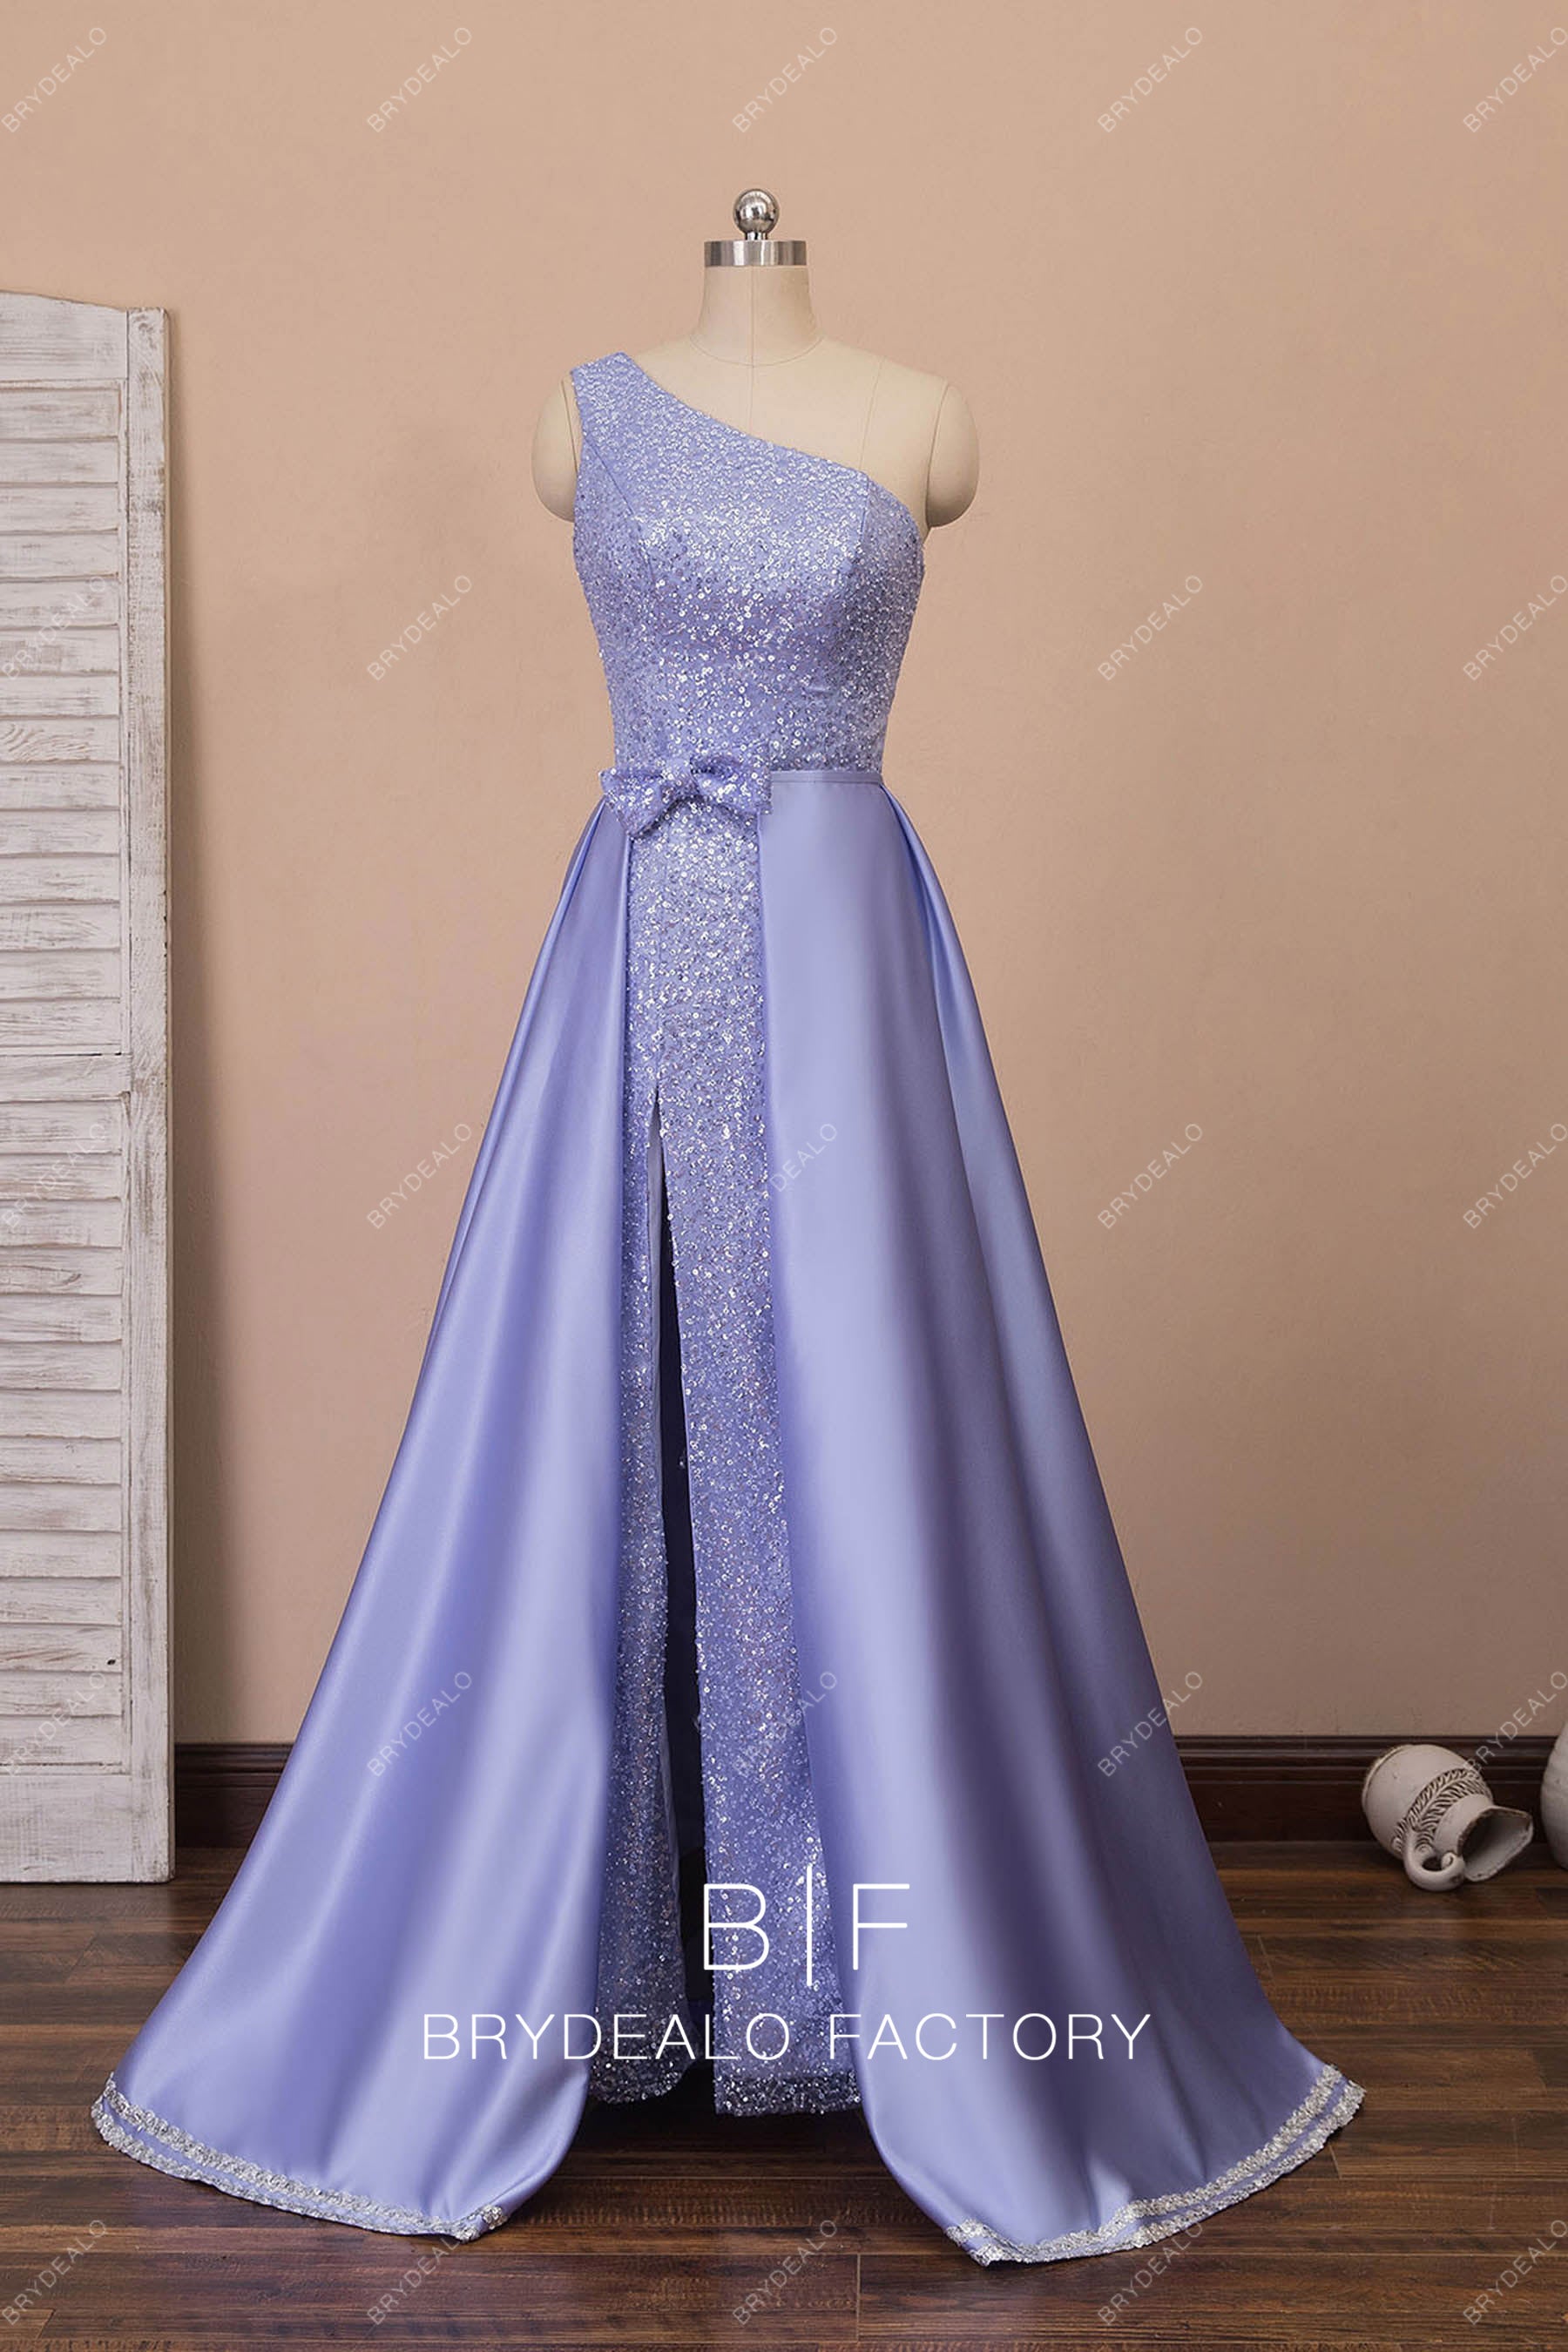 lilac sheath formal dress with satin overskirt